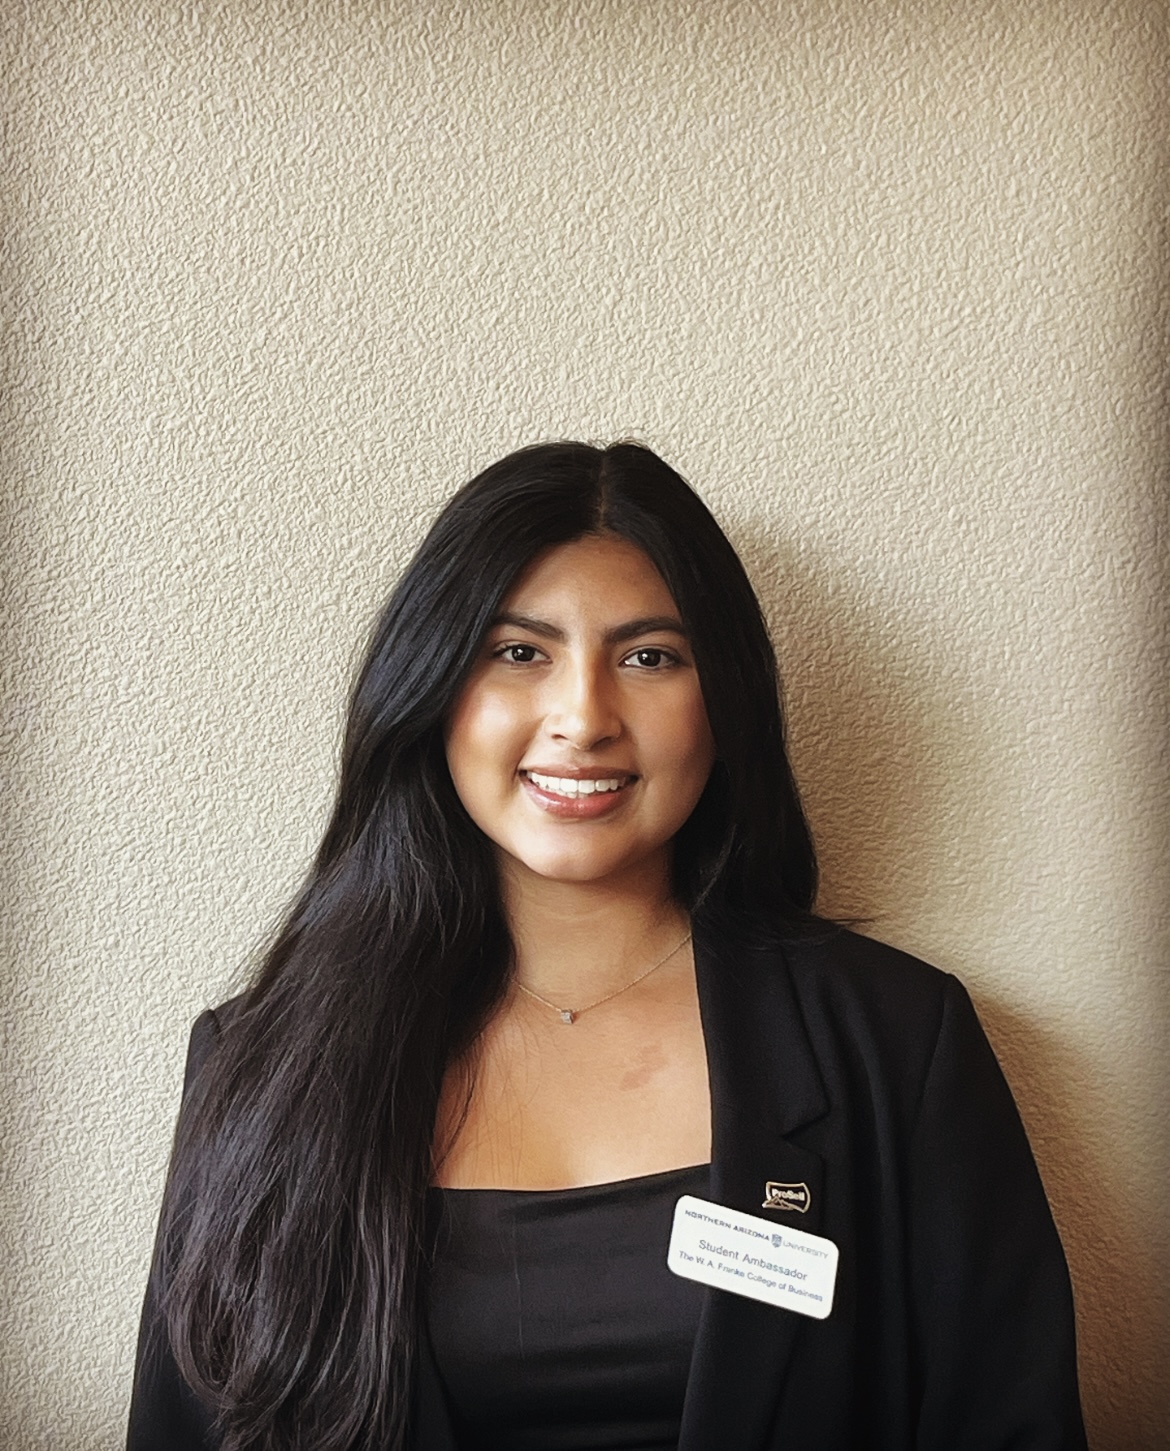 Northern Arizona University junior, Tracy Castillo, smiles and poses for a portrait